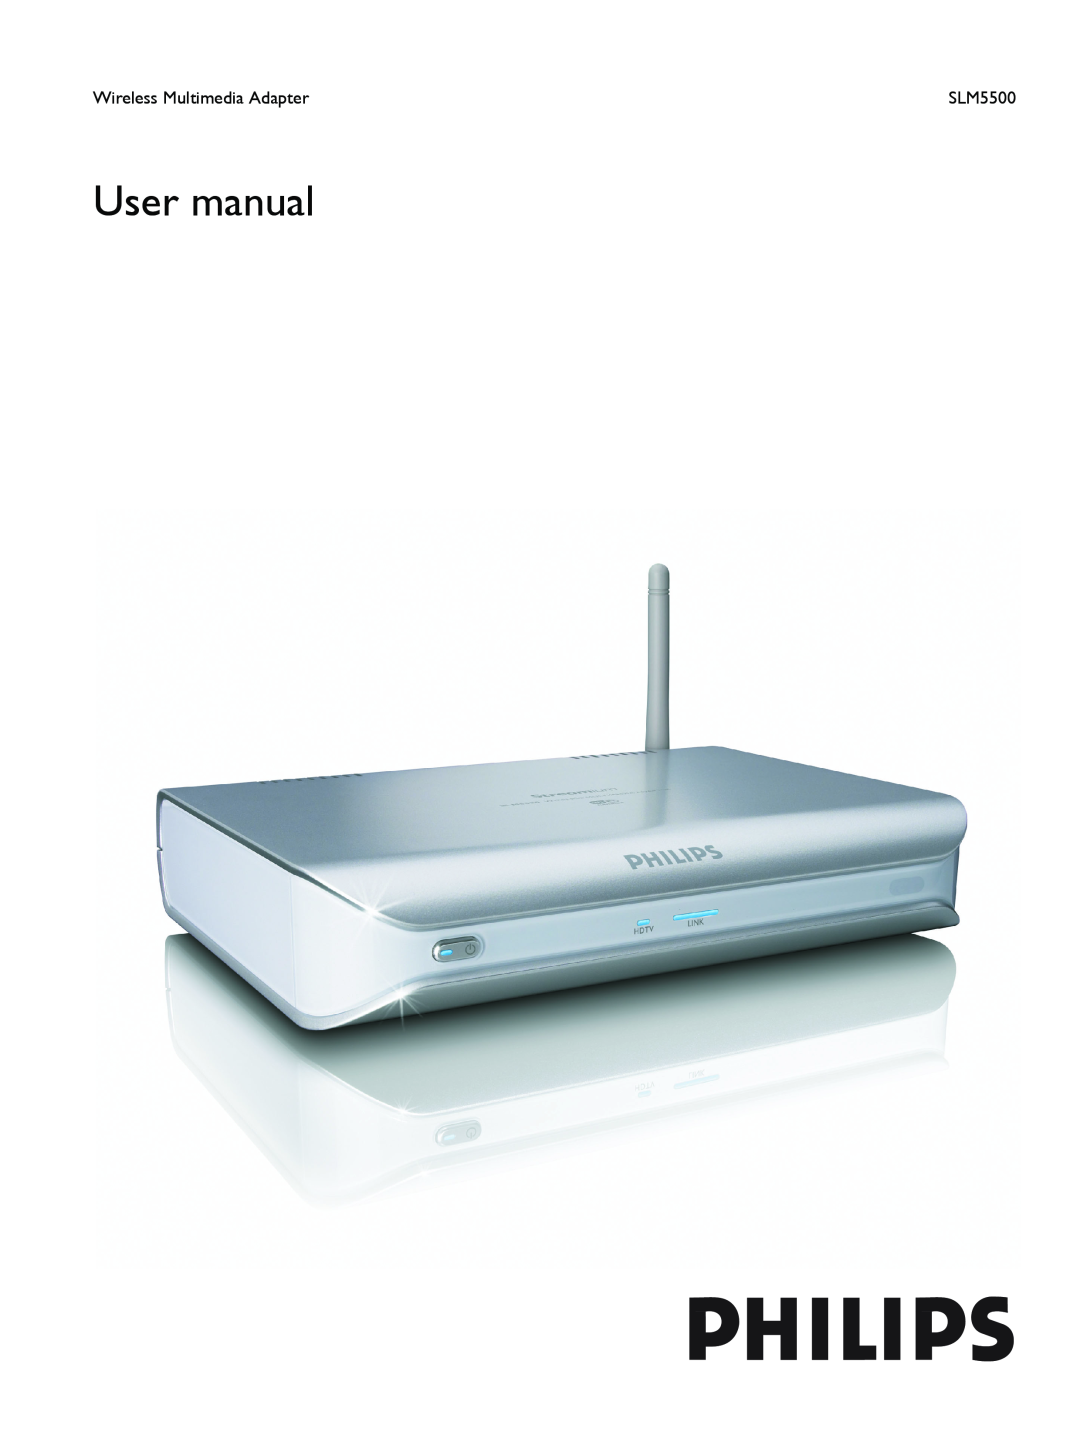 Philips SLM5500 user manual User manual, Wireless Multimedia Adapter 